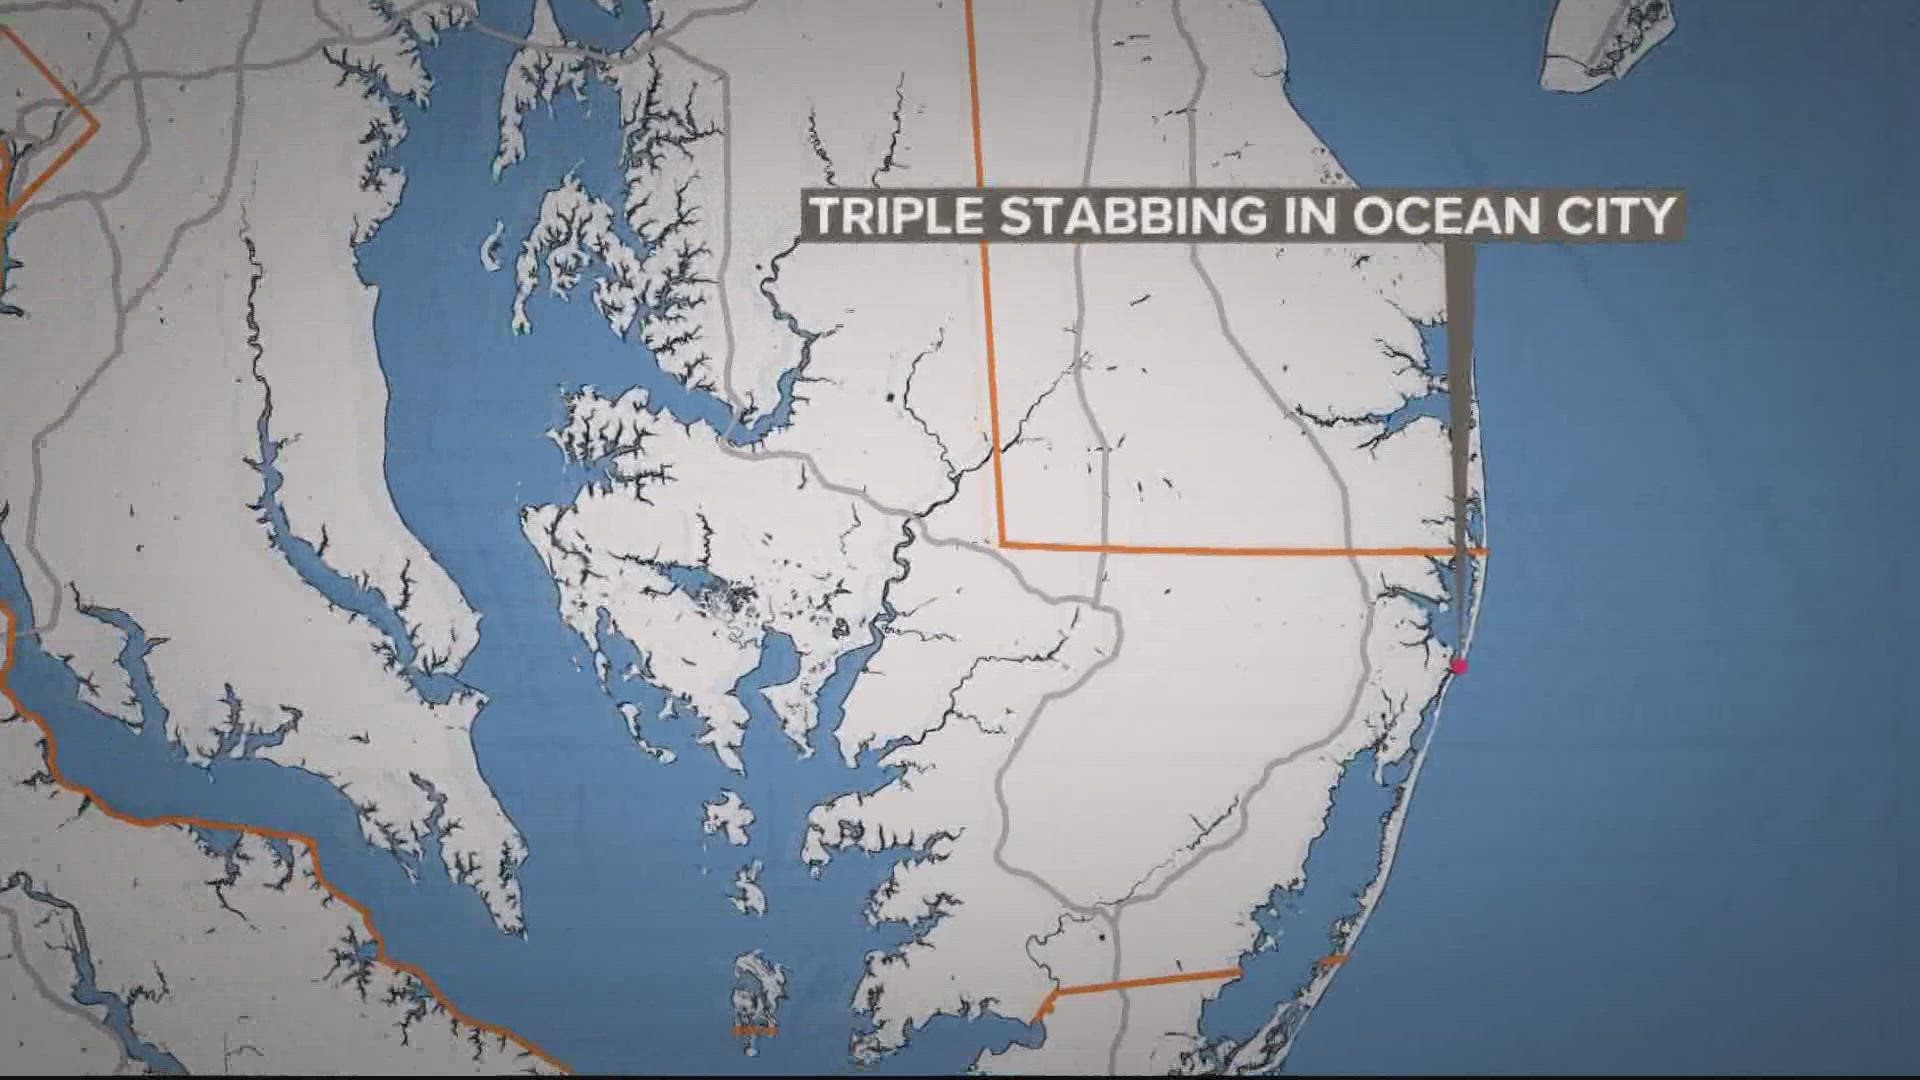 Ocean City triple stabbing investigation